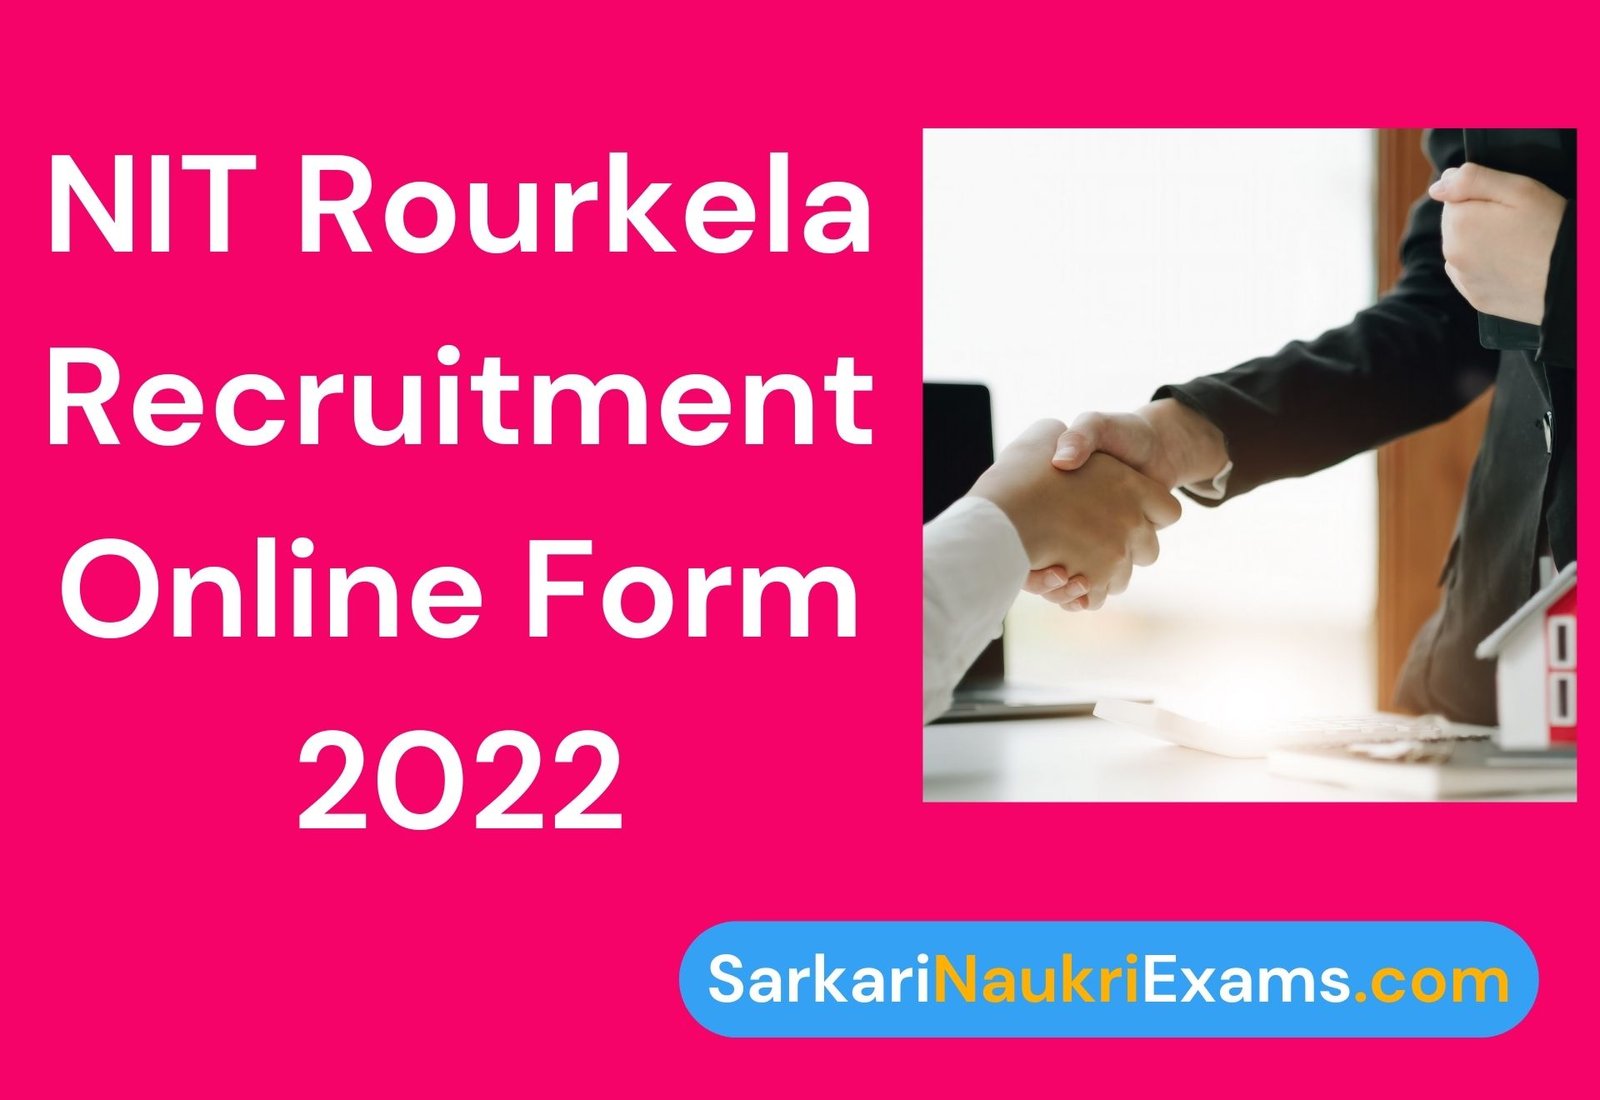 NIT Rourkela Recruitment Online Form 2022 | 143 Vacancy Notification